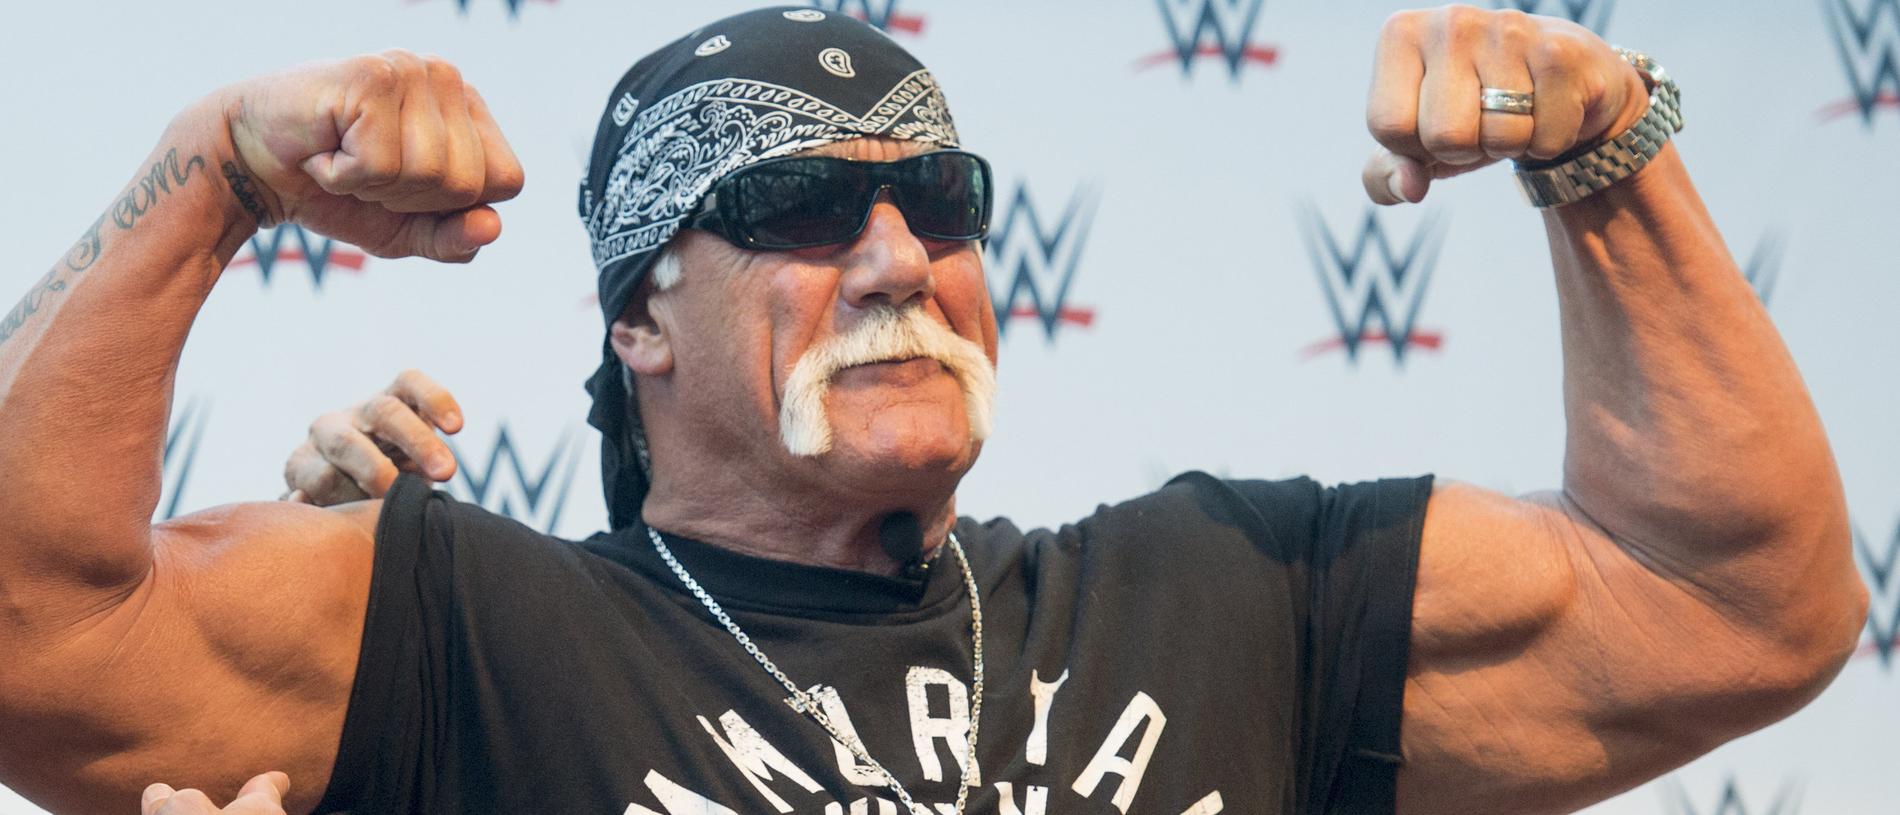 luge Klappe Yoghurt Hulk Hogan makes wild claims about coronavirus